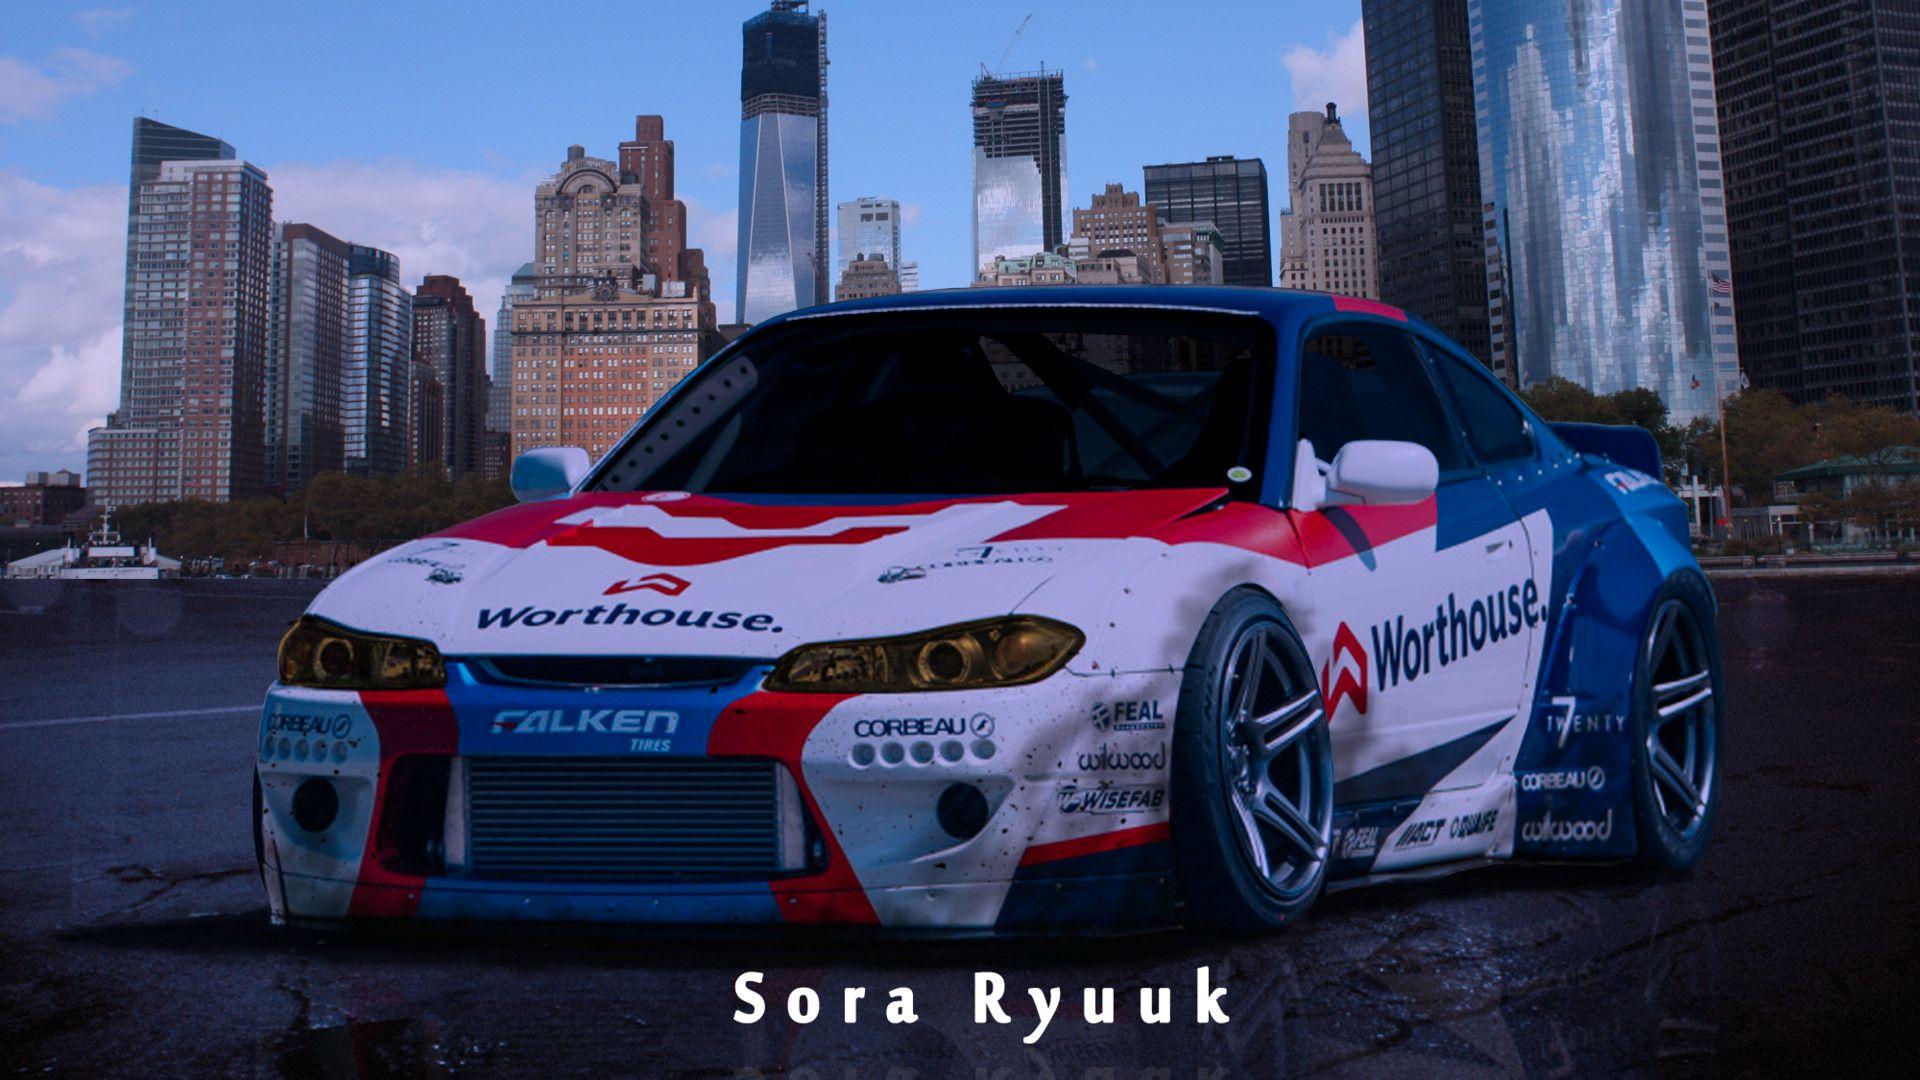 Nissan Silvia S15 Worthouse Drift Team, Sora Ryuuk